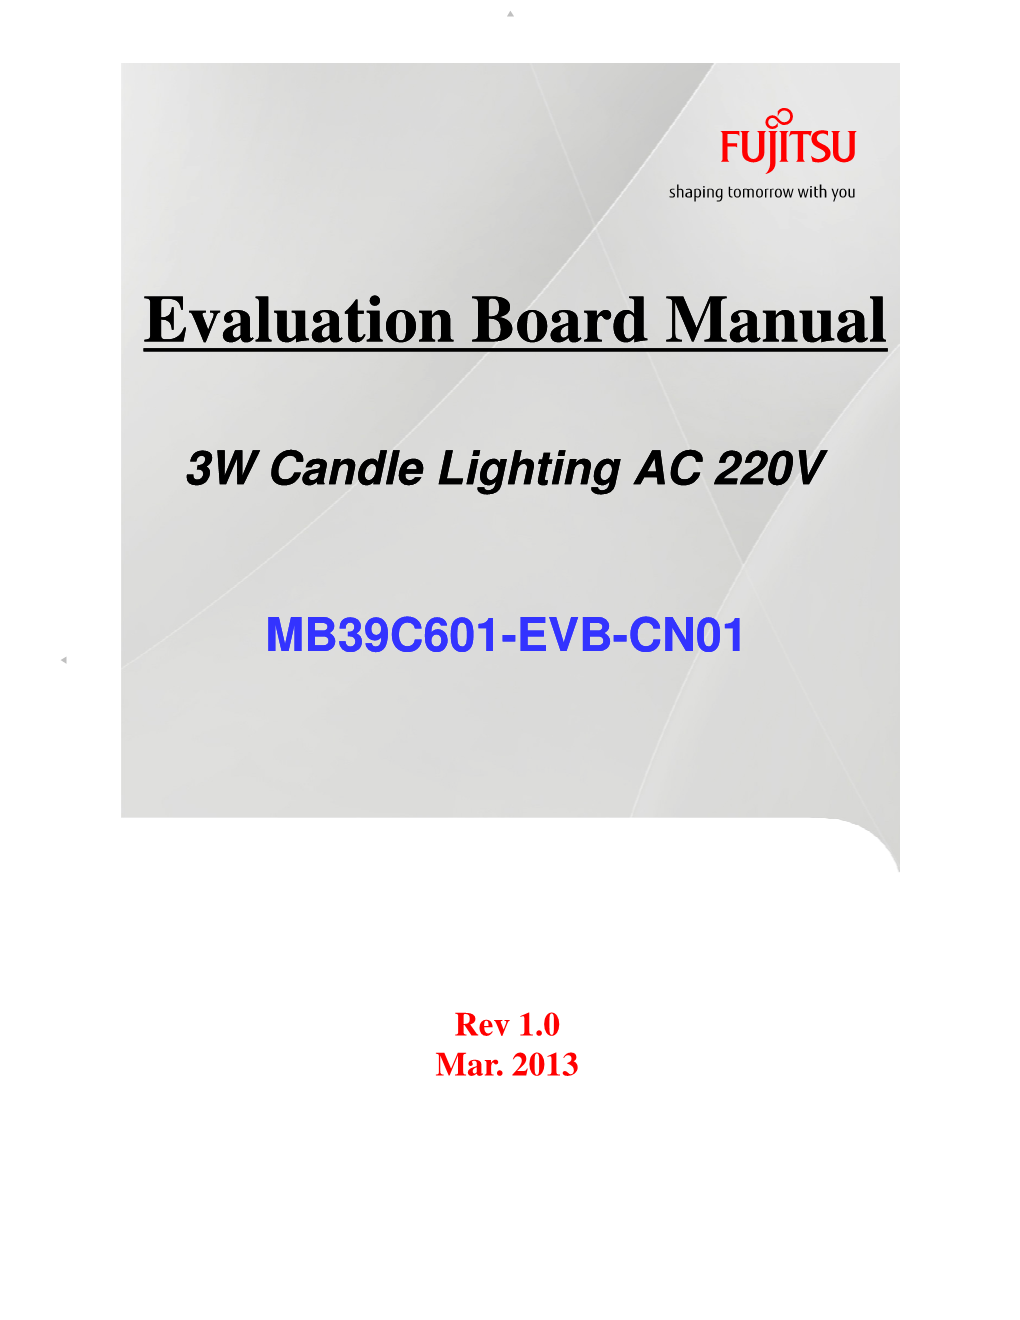 Evaluation Board Manual